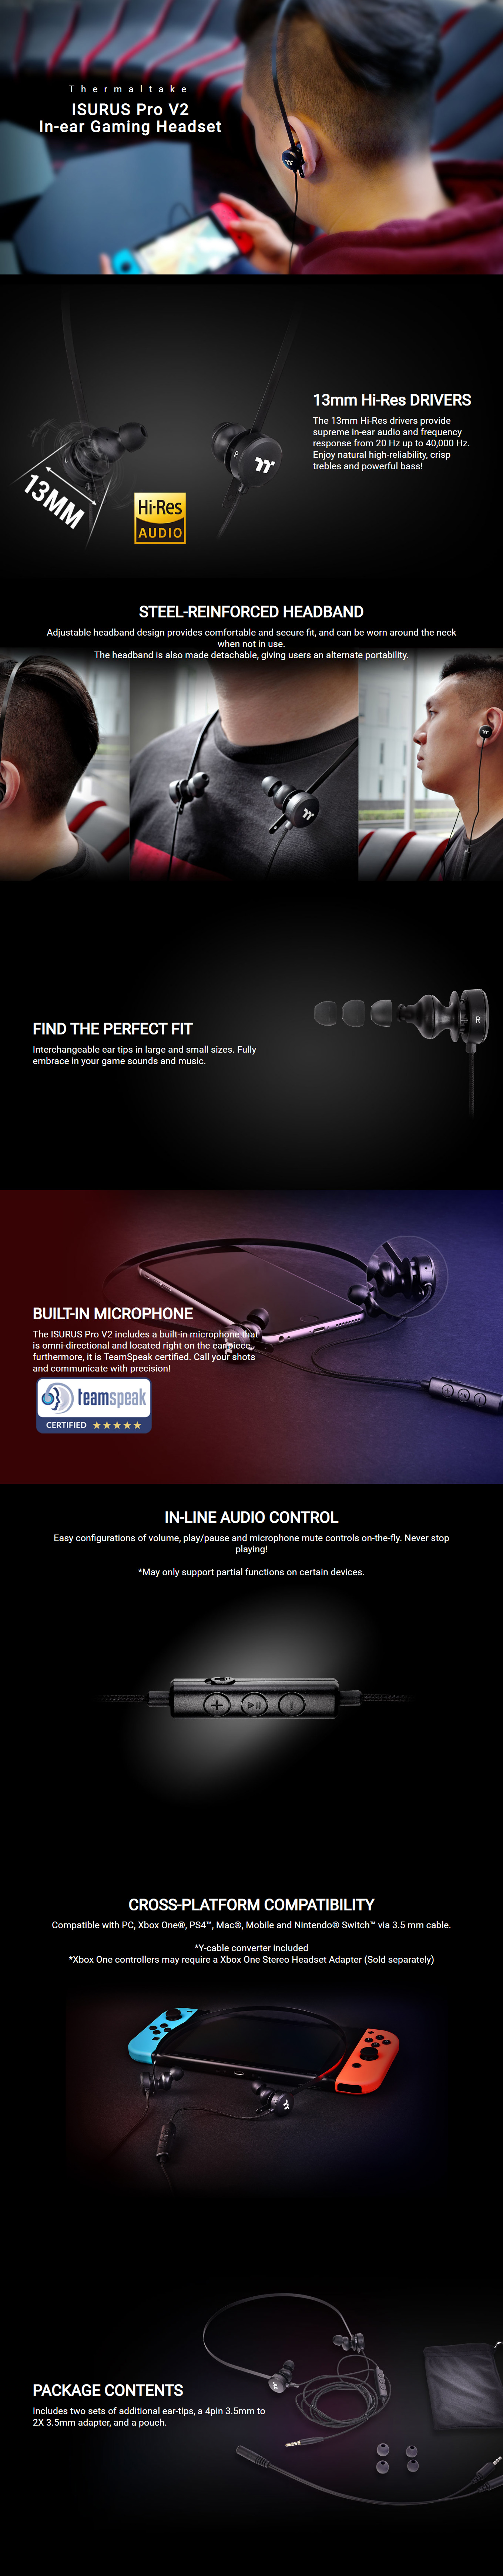 Headphones-Thermaltake-ISURUS-Pro-V2-In-Ear-Gaming-Headset-1